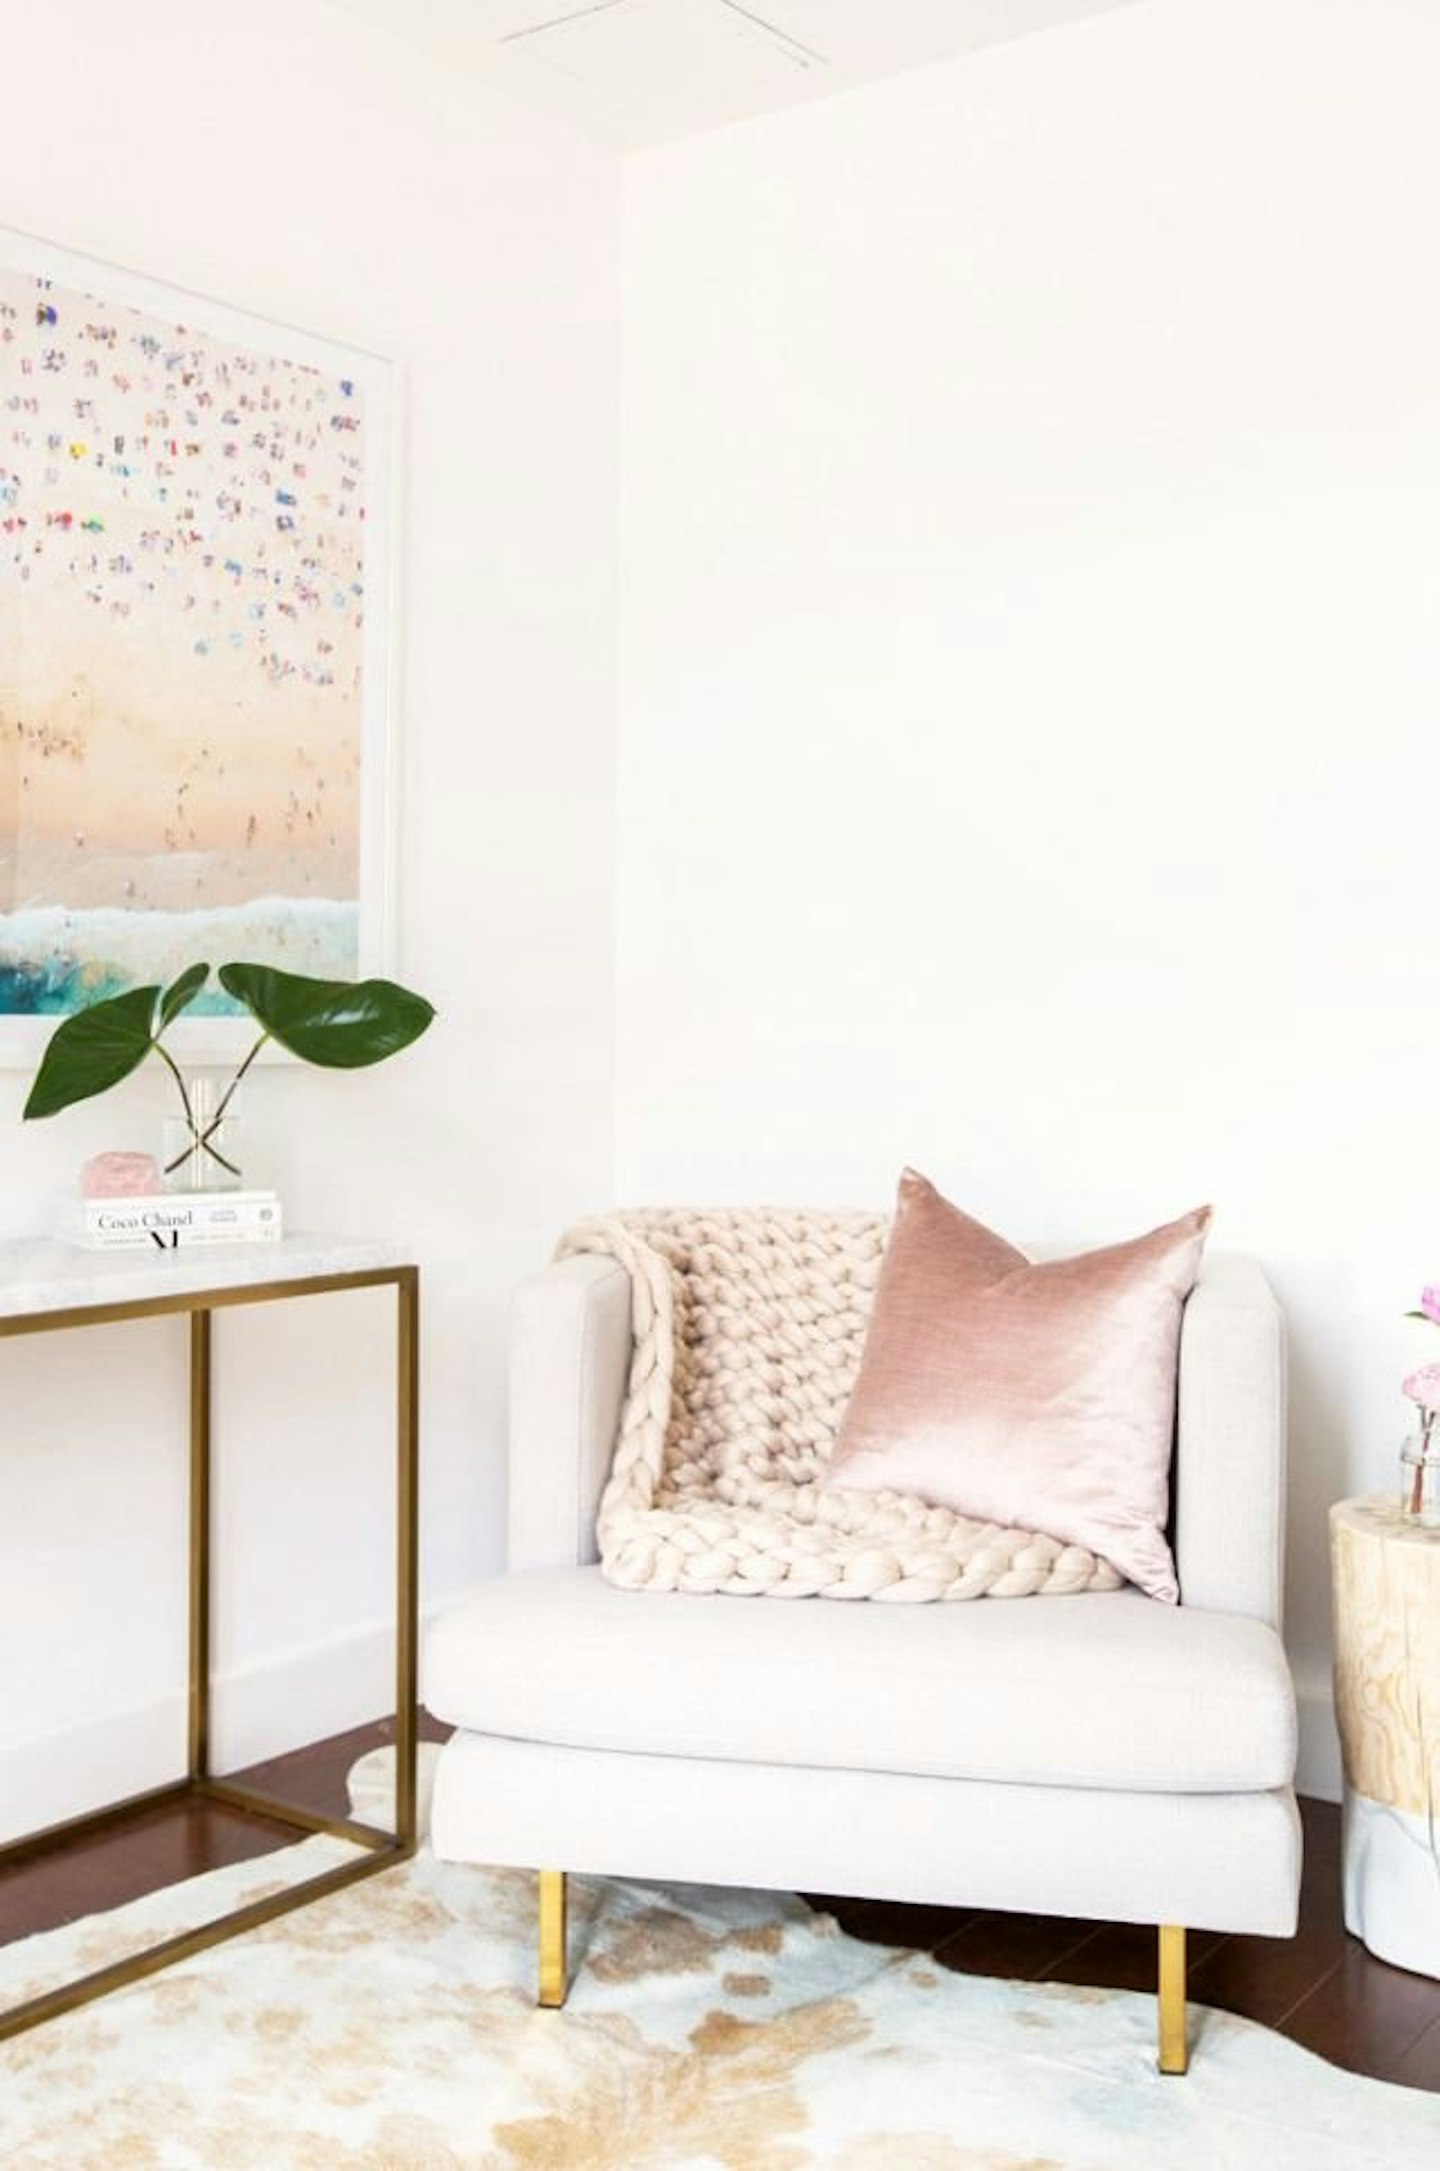 Millenial-Pink-Accents-Interior-Design-Pinterest-Inspiration-Cushions